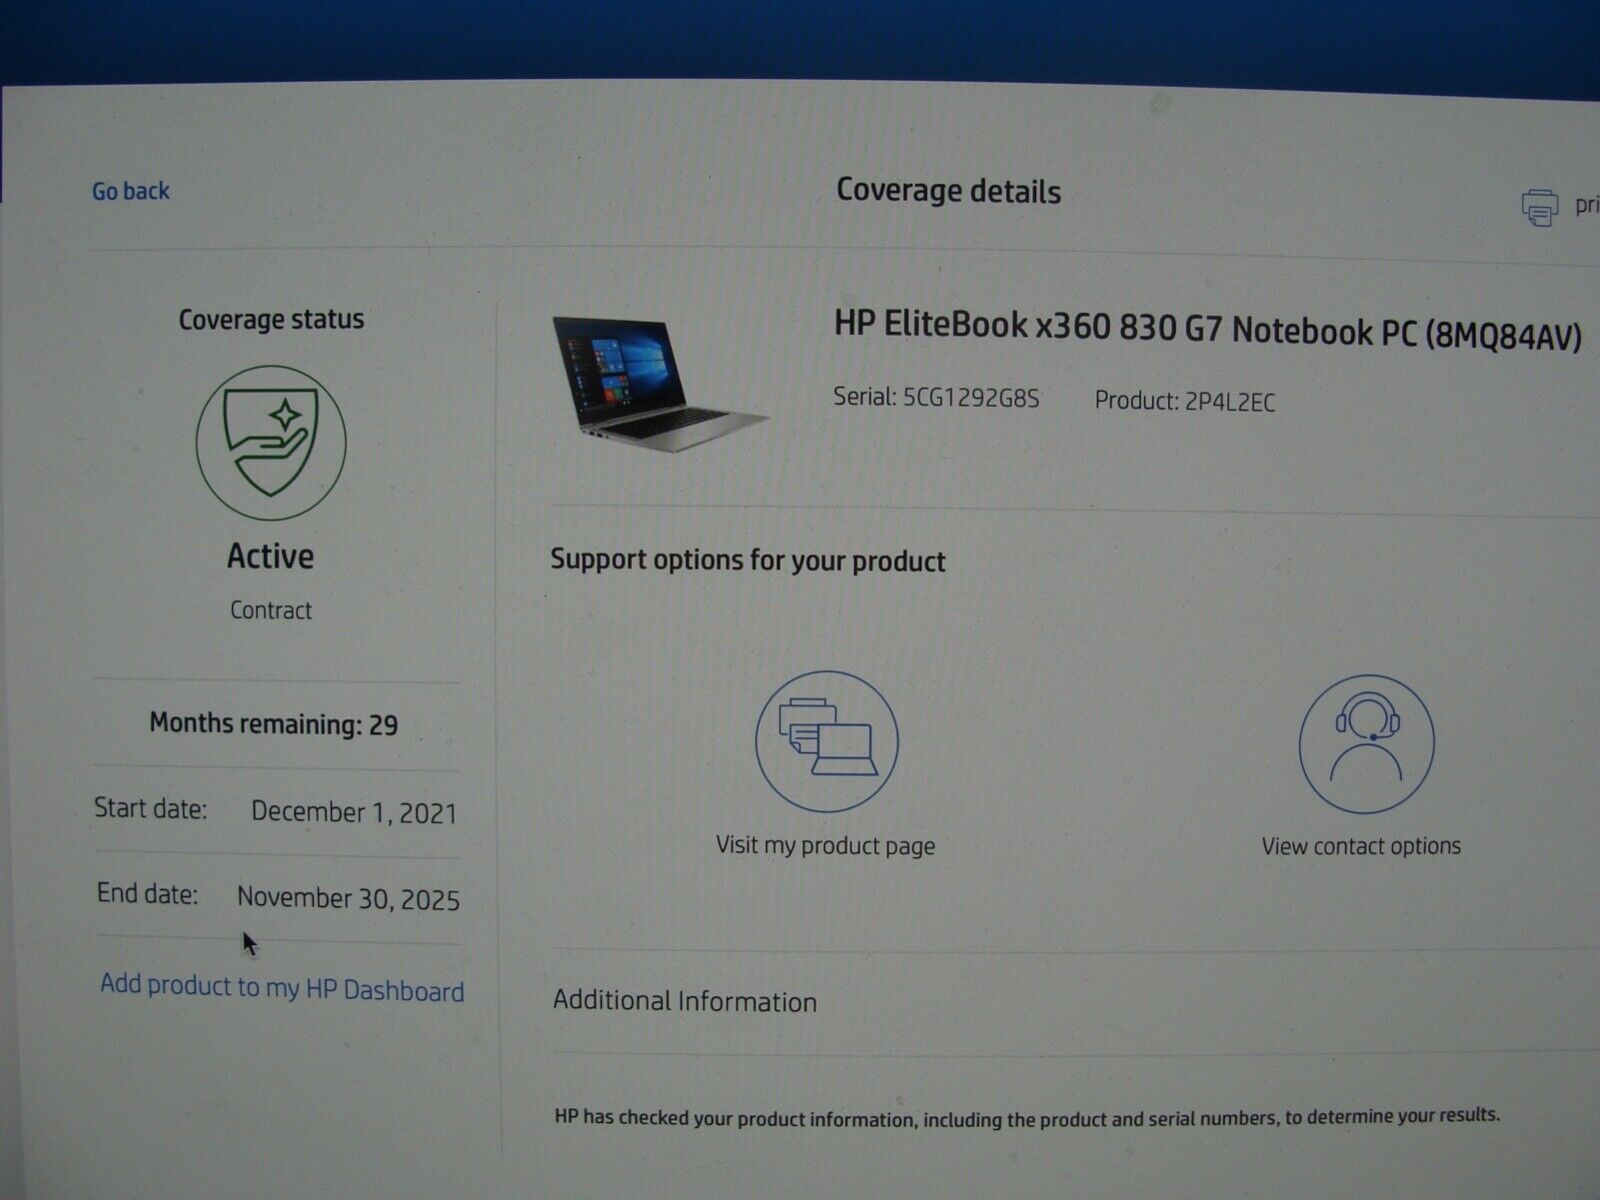 HP EliteBook x360 830 G7 Notebook PC, HP